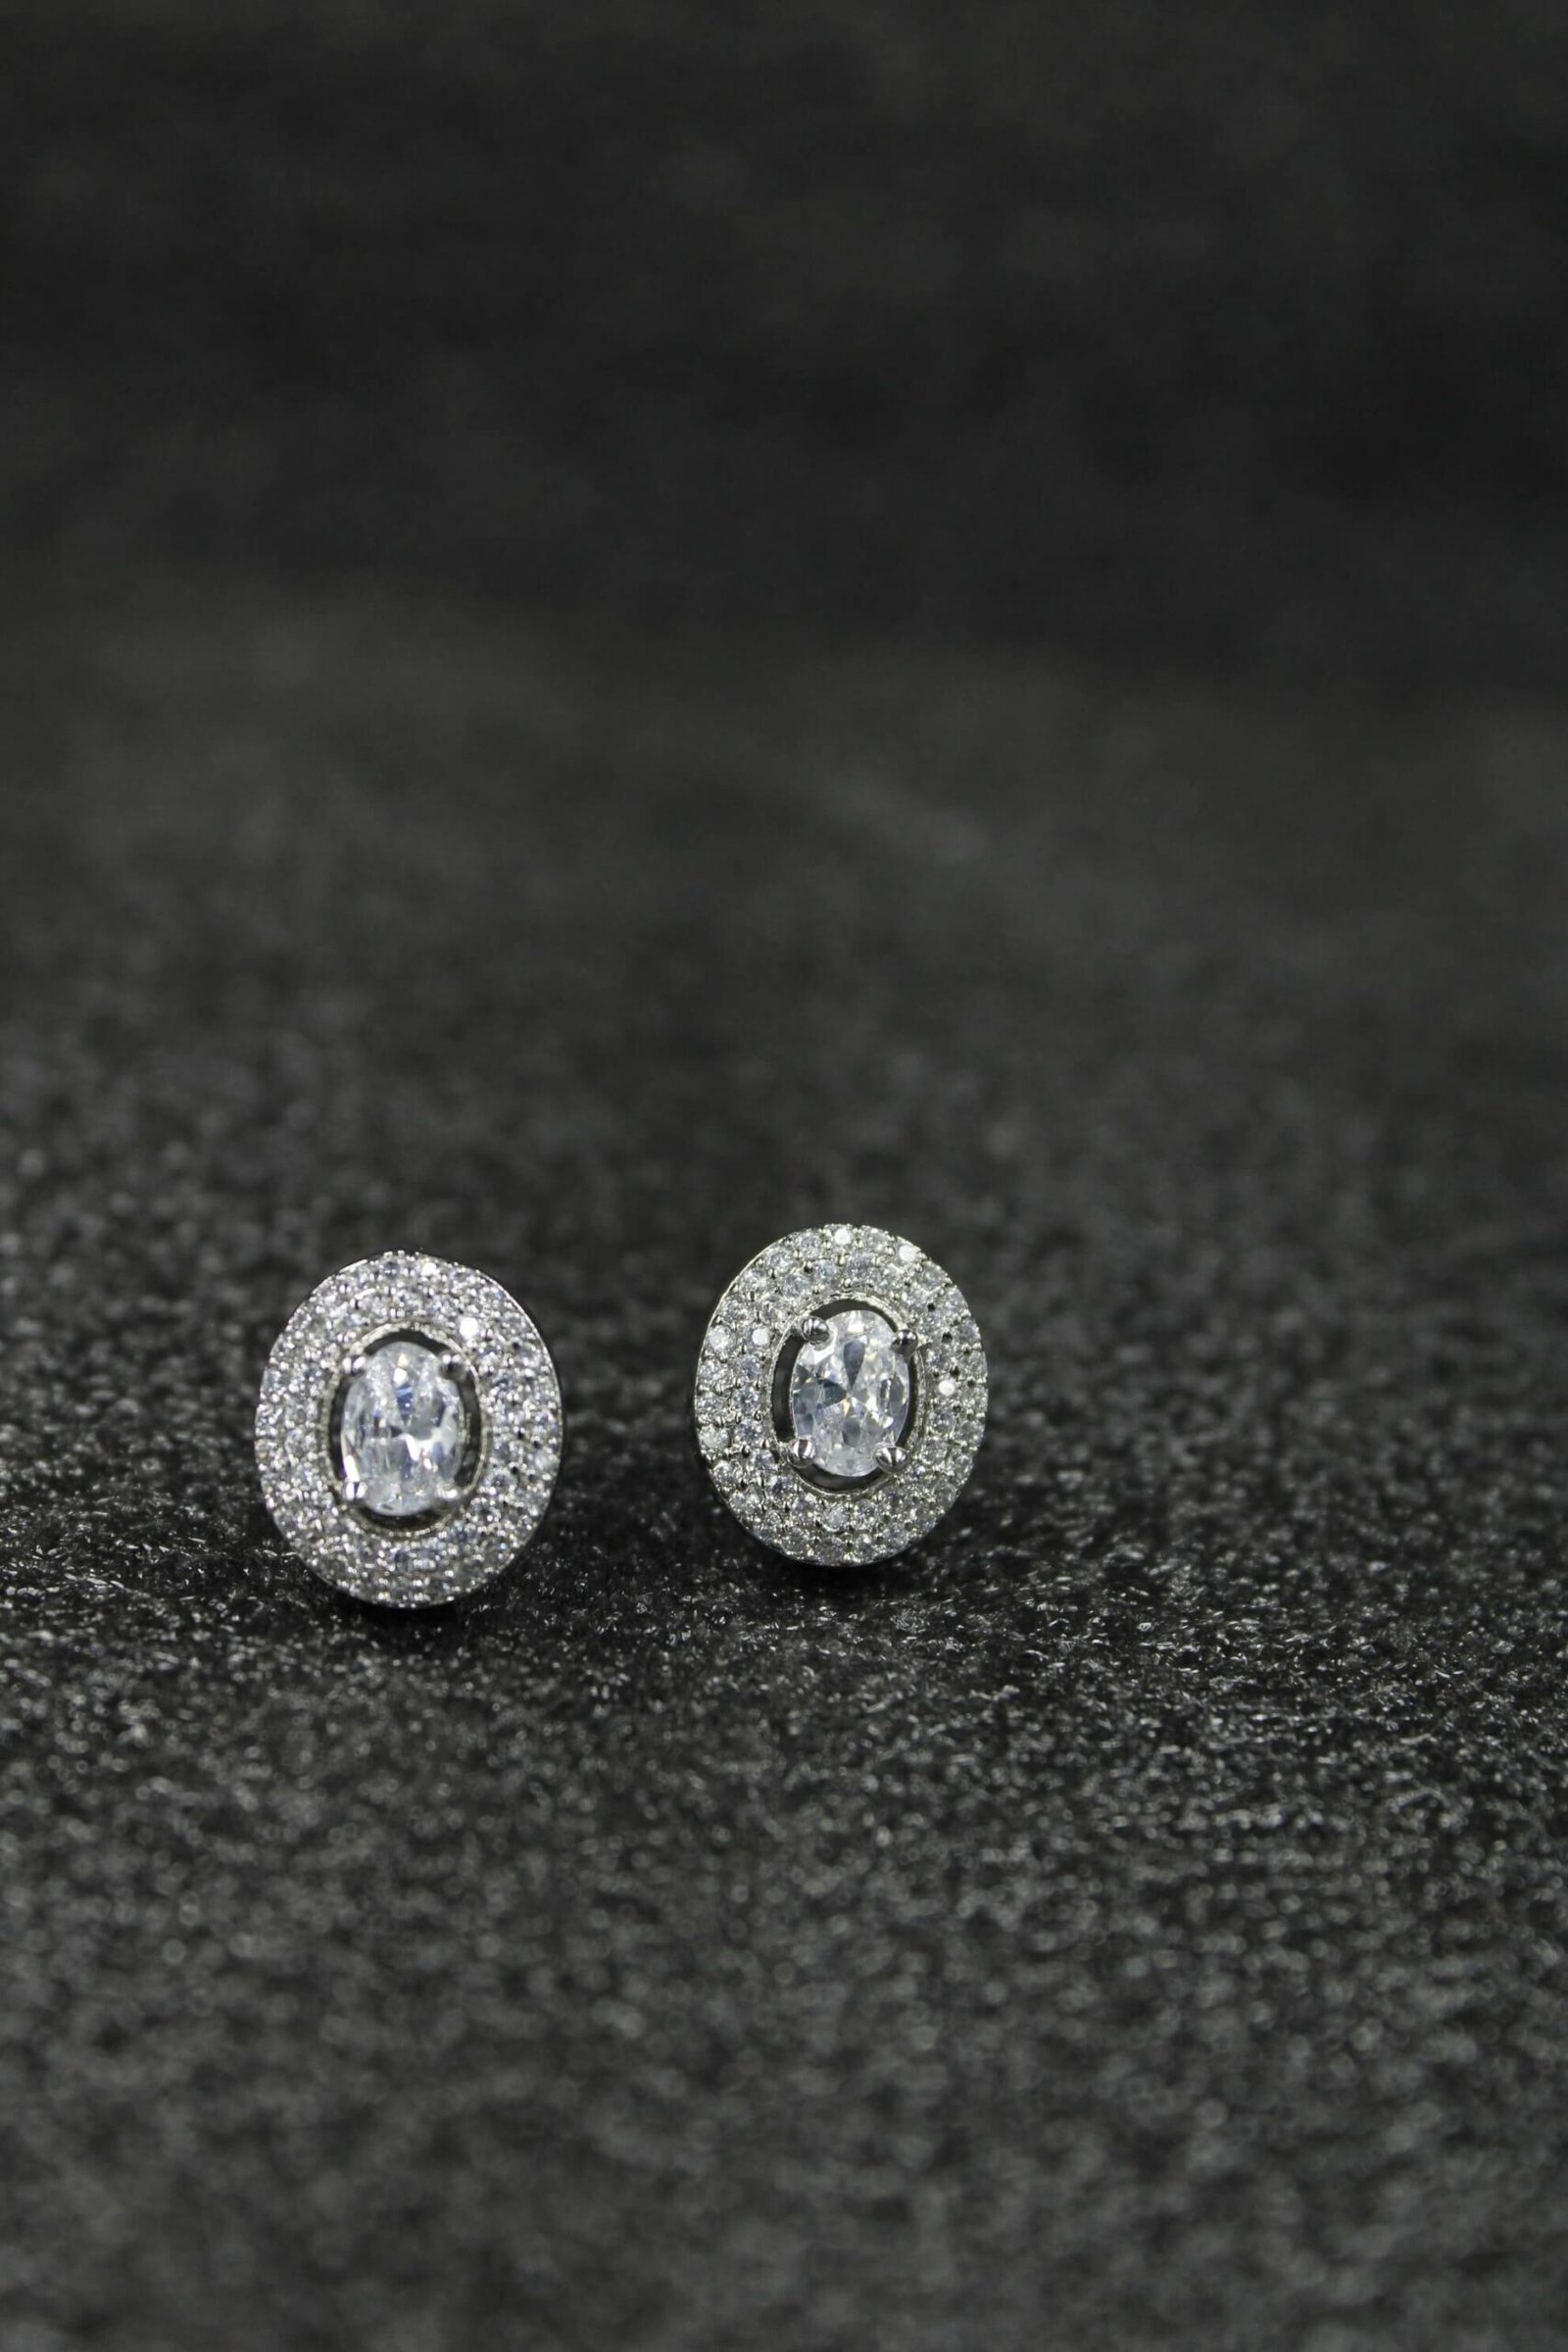 Share 173+ original diamond stud earrings best